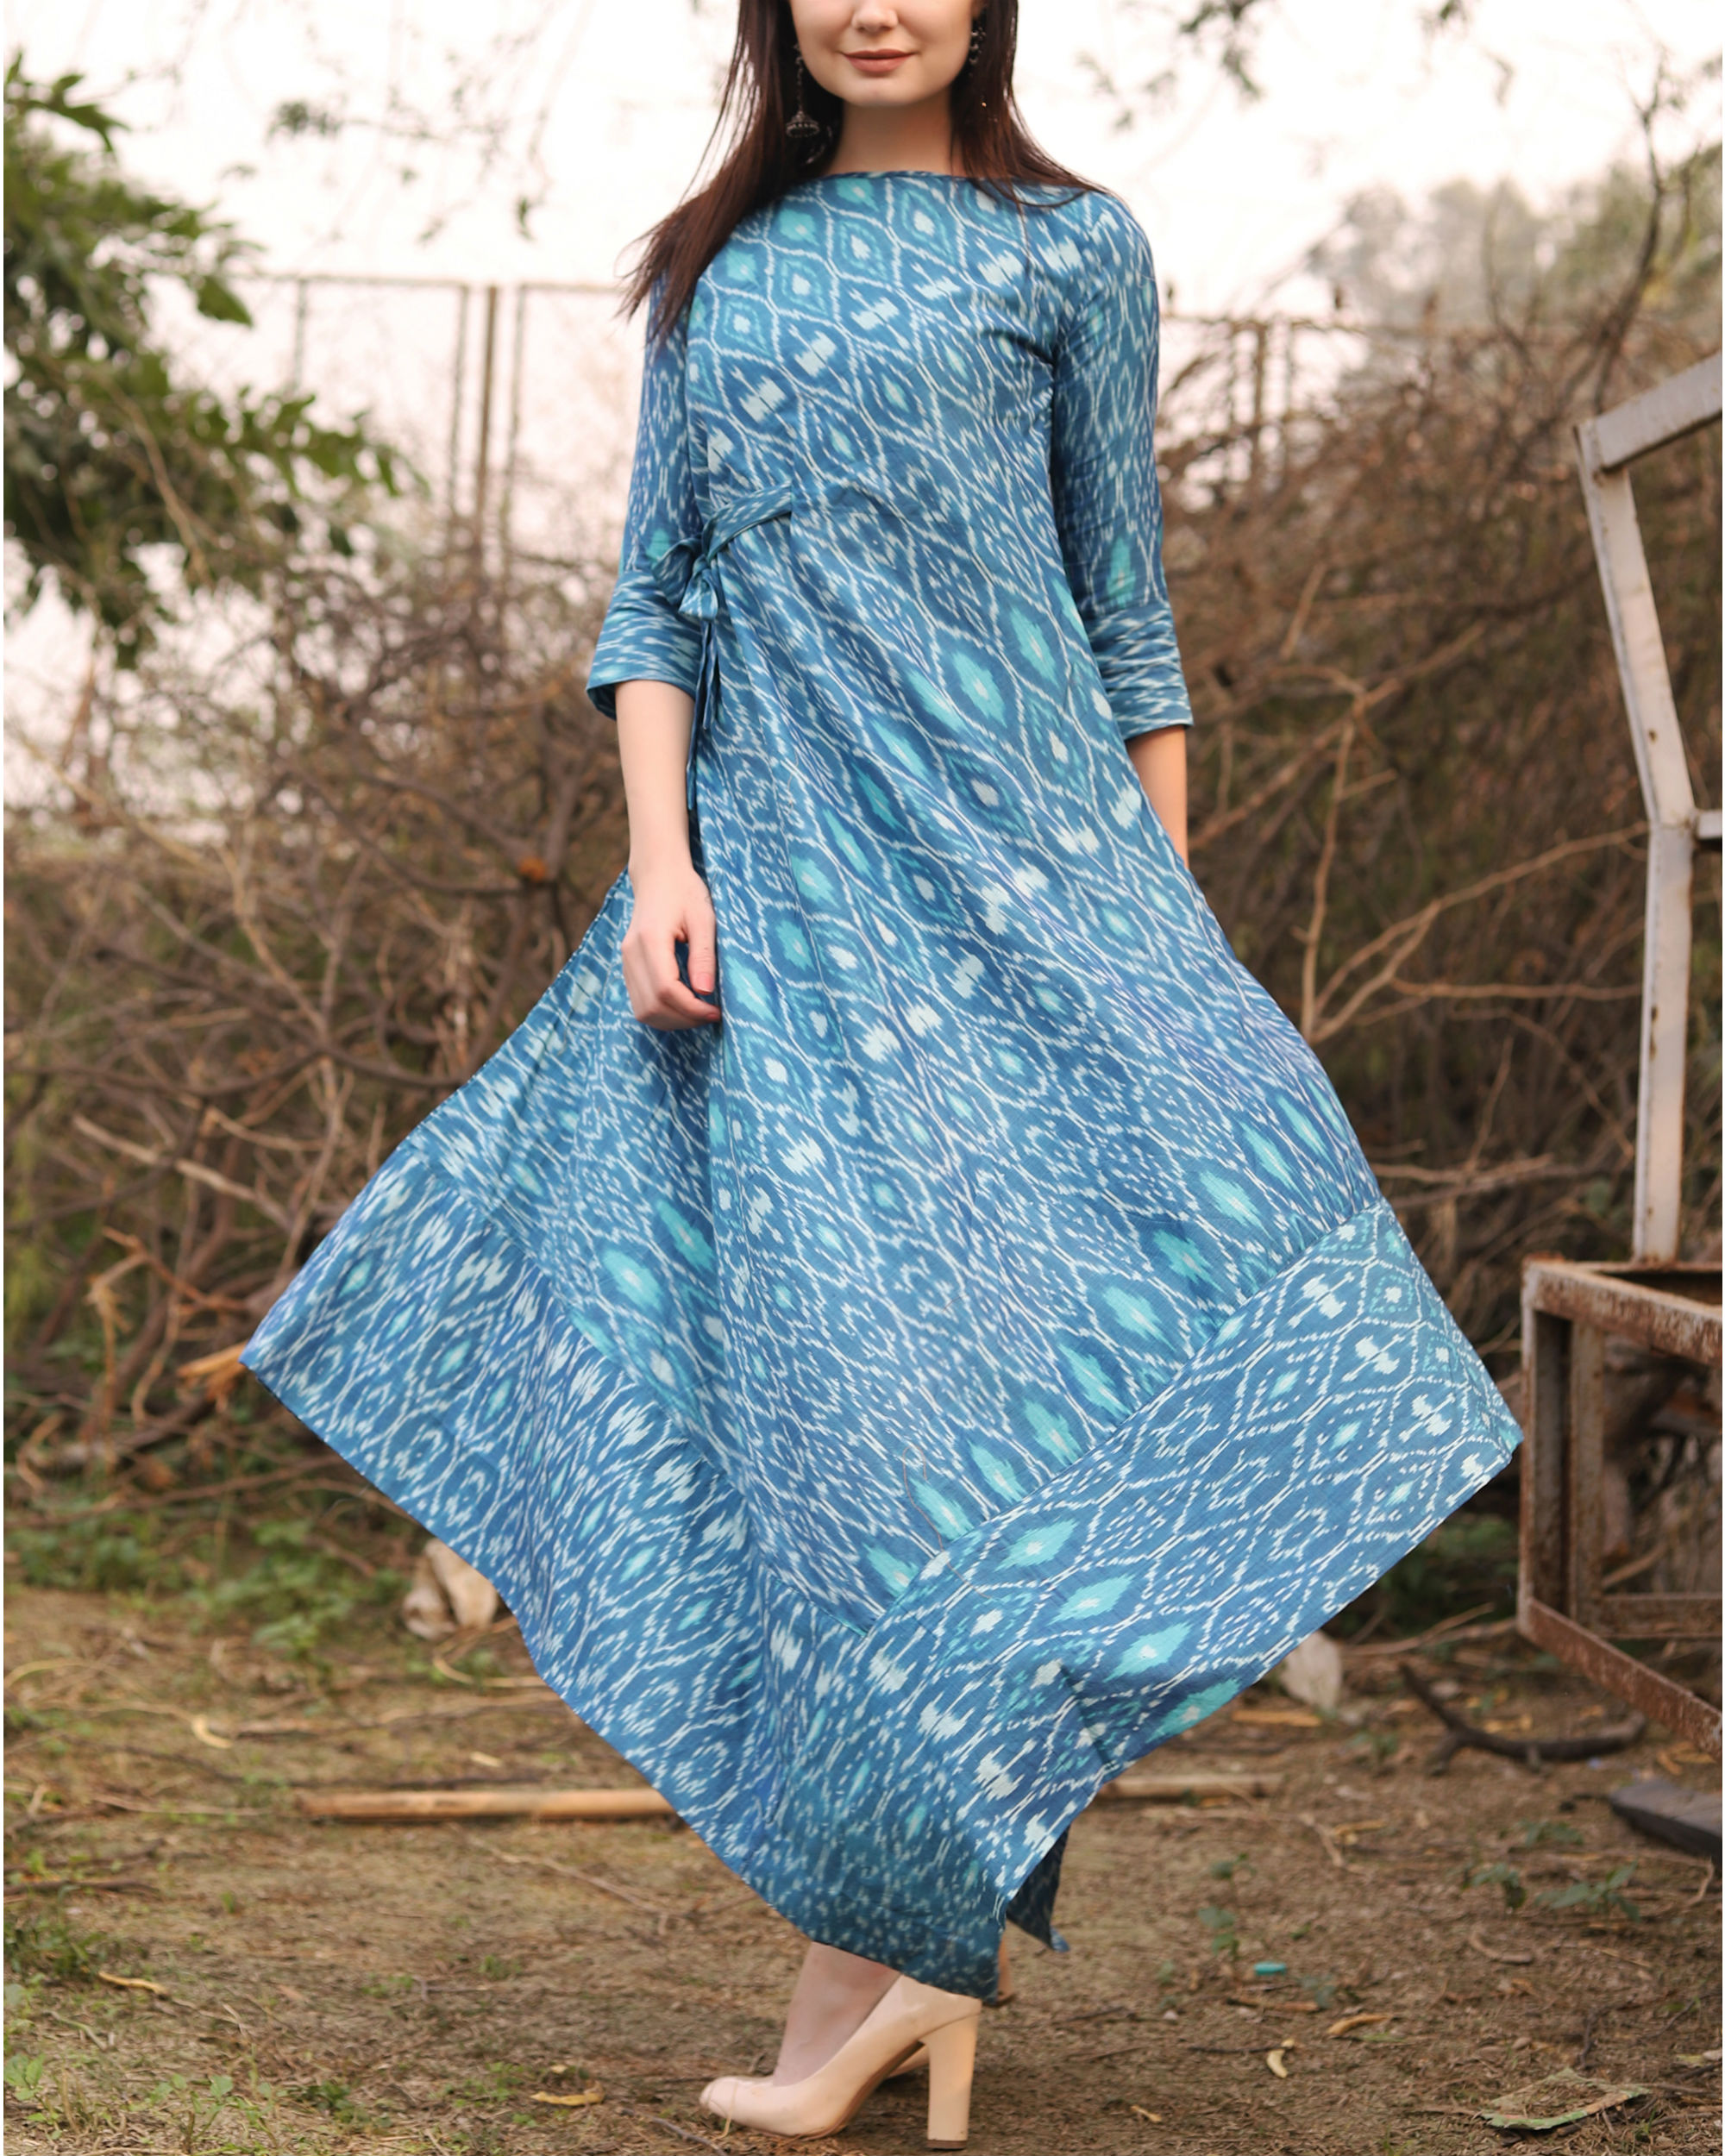 Blue ikat uneven hemline dress by Desi Doree | The Secret Label